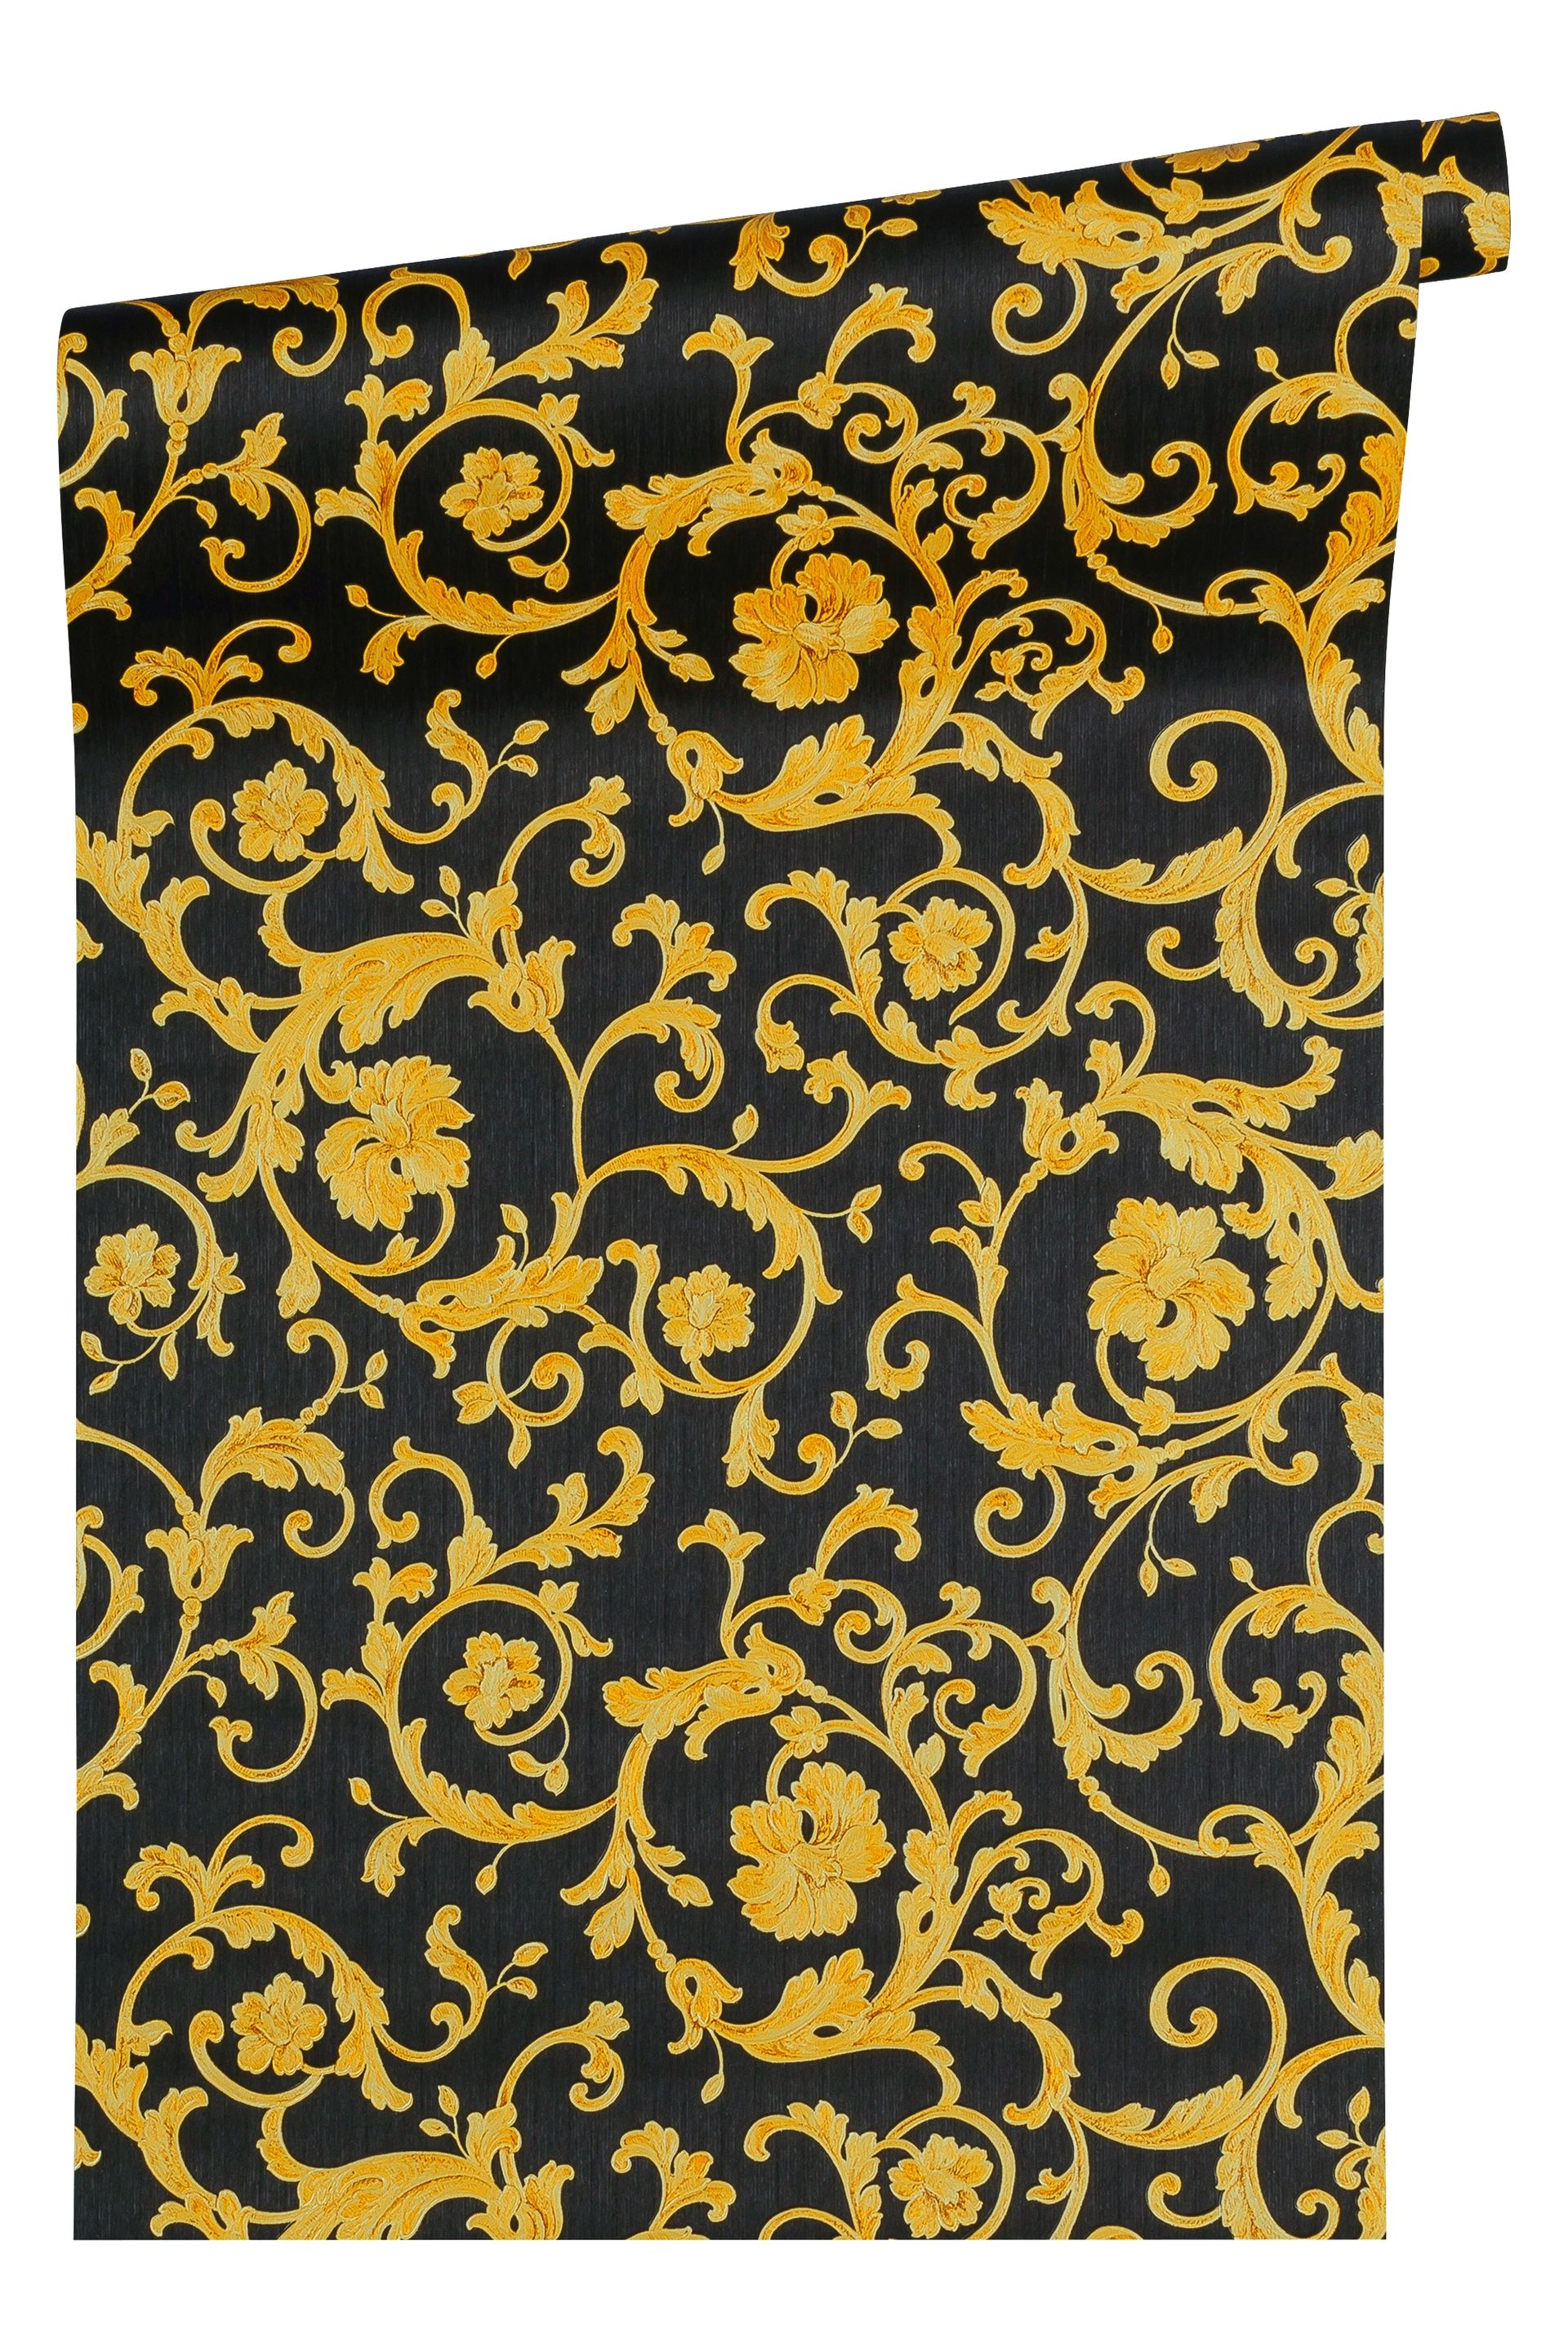 Versace wallpaper Versace 3, Design Tapete, gold, schwarz 343262